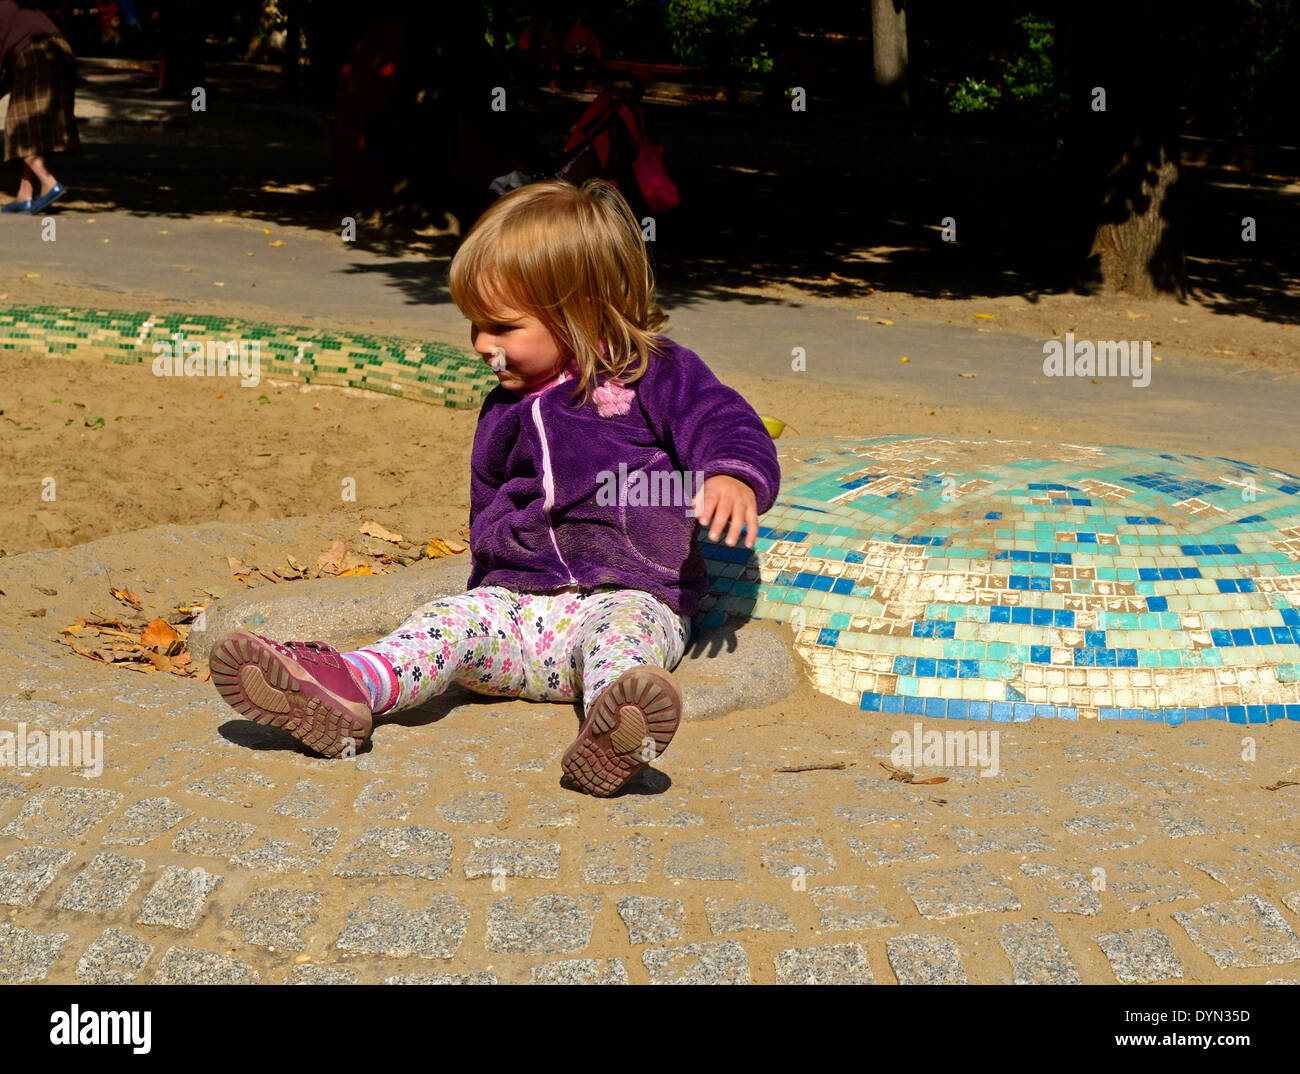 Little girl on the playground sitting on the hillside Stock Photo